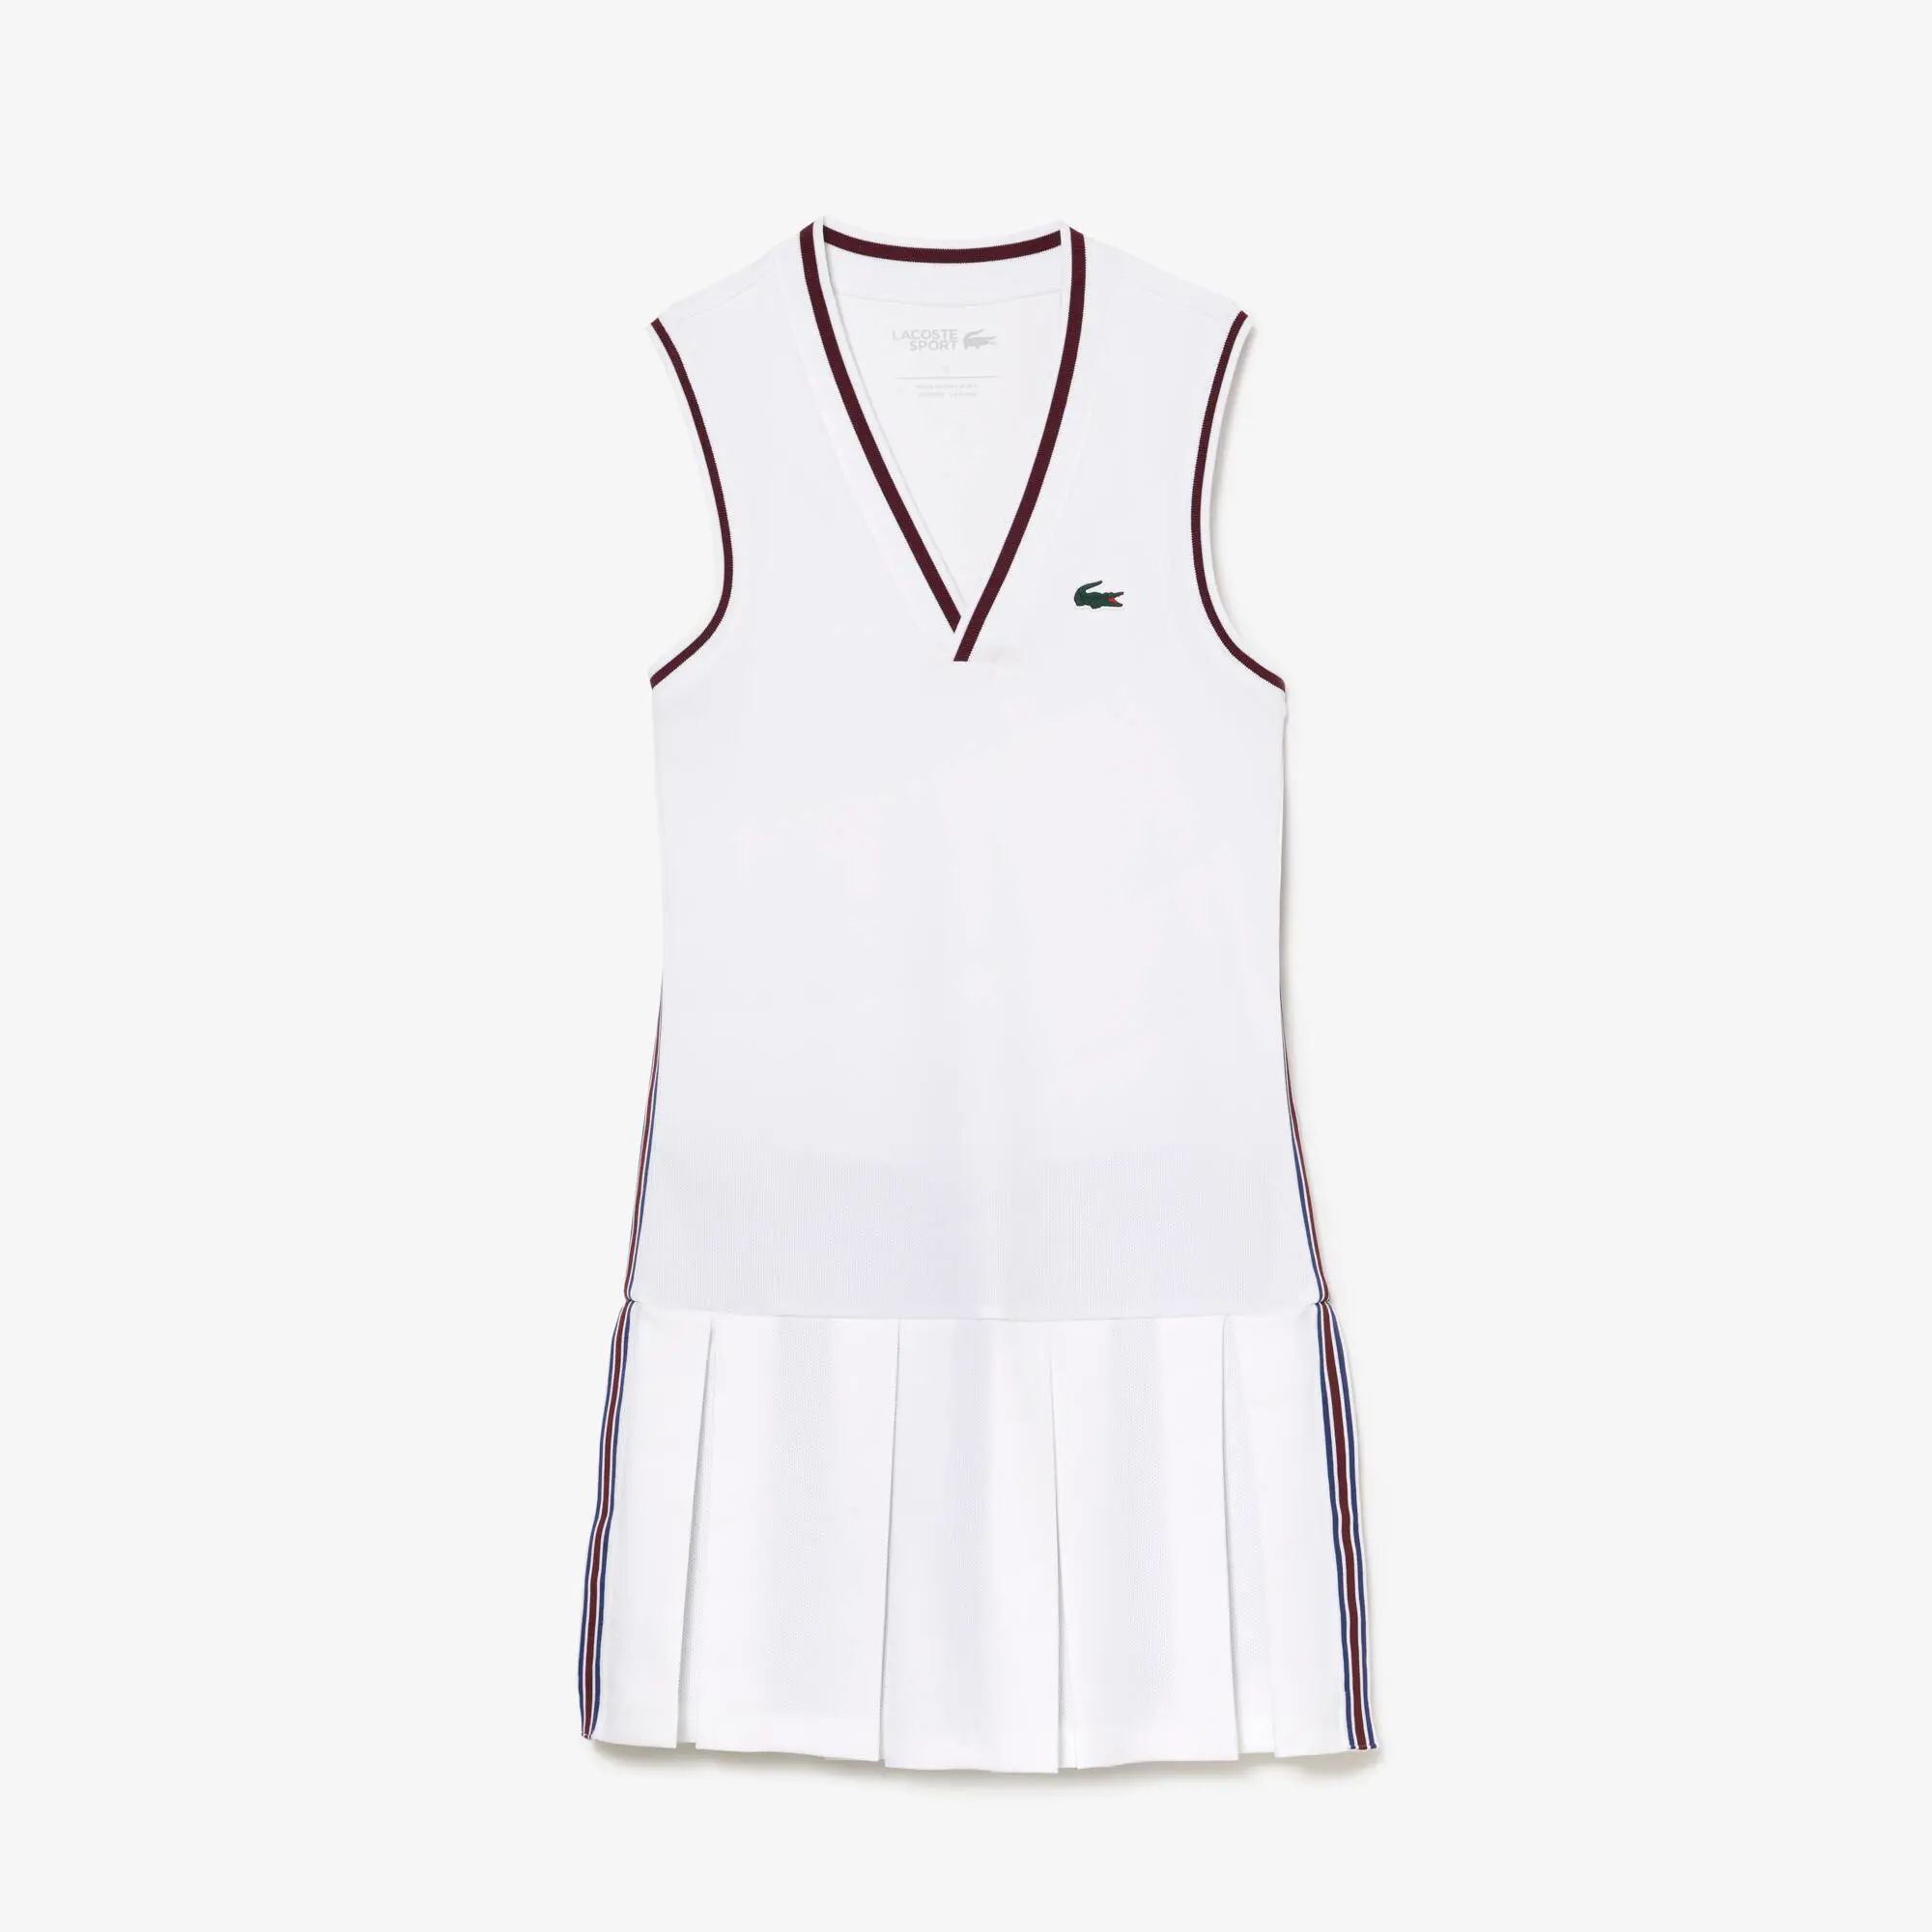 Lacoste Tennis Dress with Removable Piqué Shorts. 1